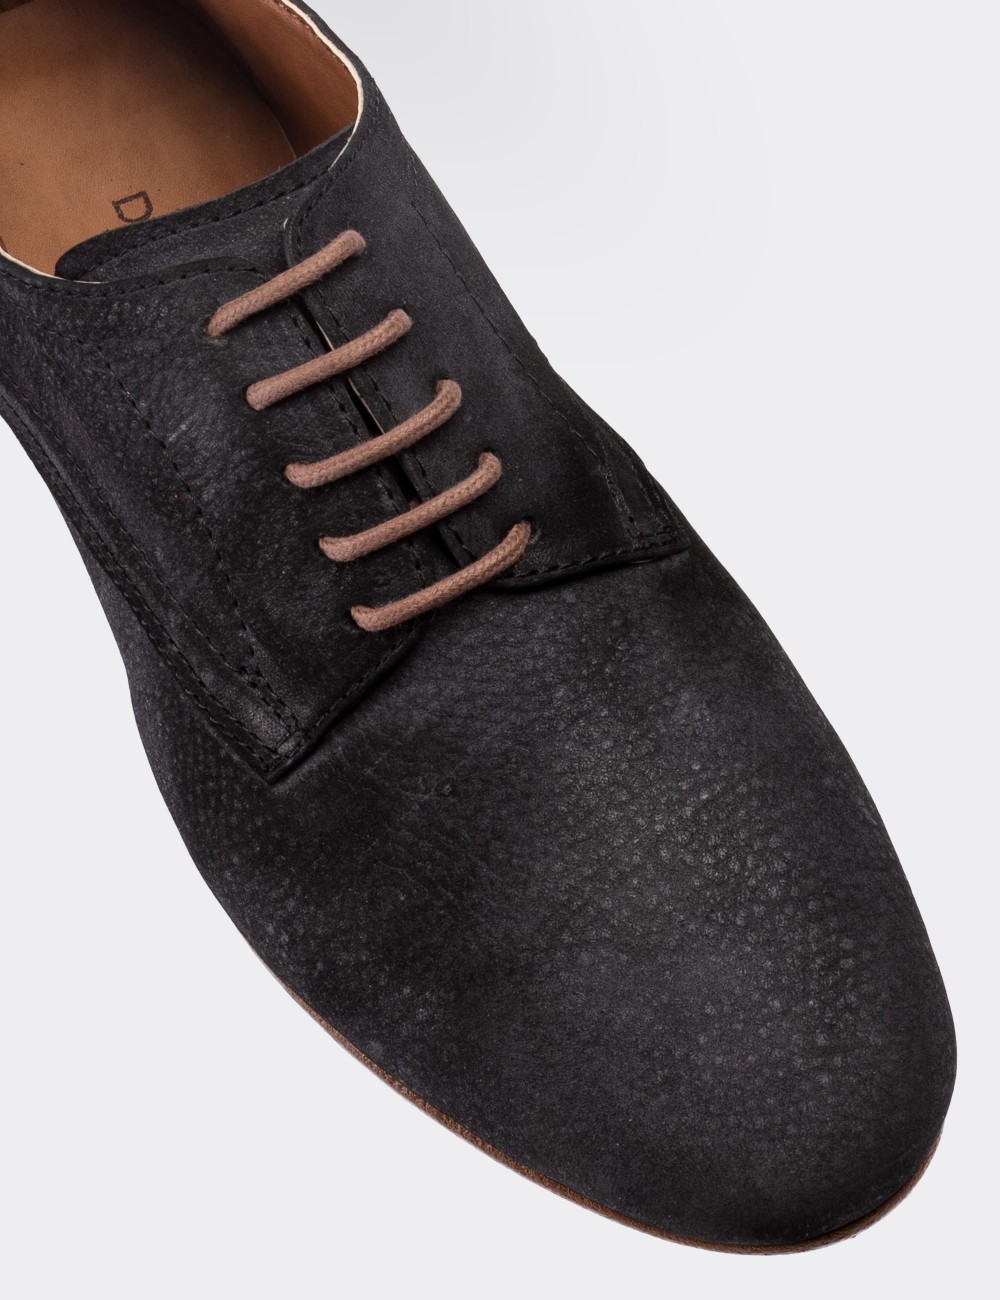 Black Nubuck Leather Lace-up Shoes - 01430ZSYHC01